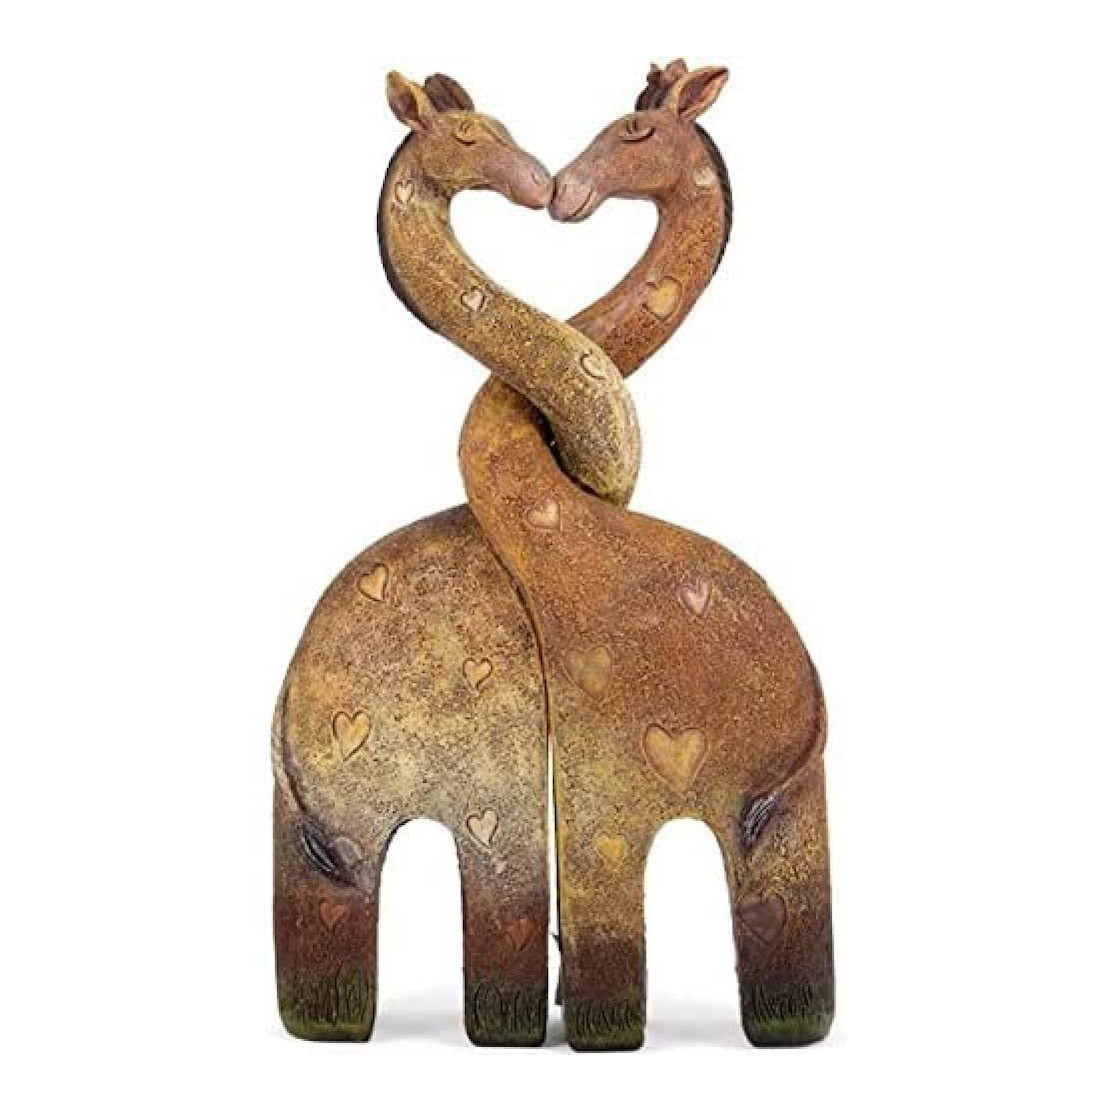 Entwined Kissing Giraffe Figurines